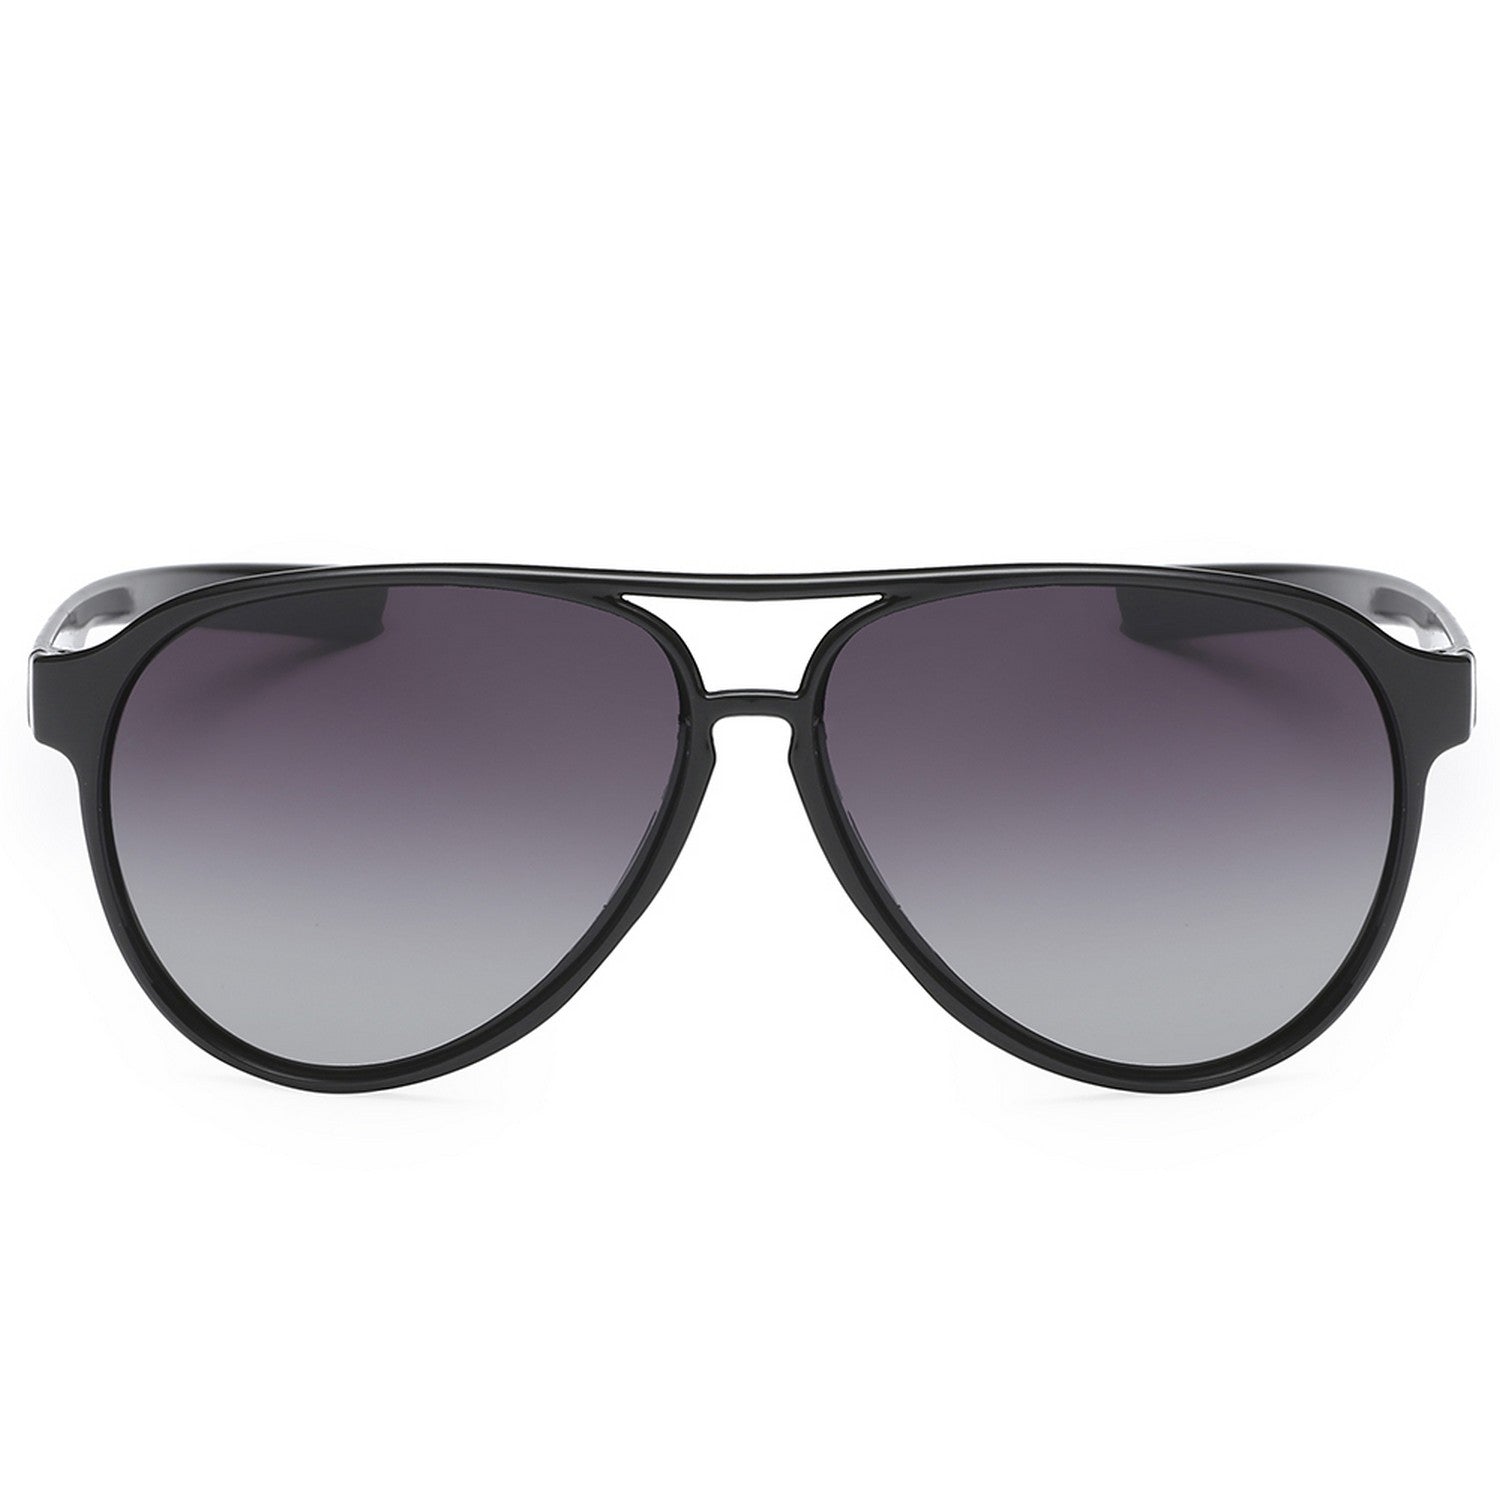 Flexible Aviator Style Polarized Sunglasses for Men and Women